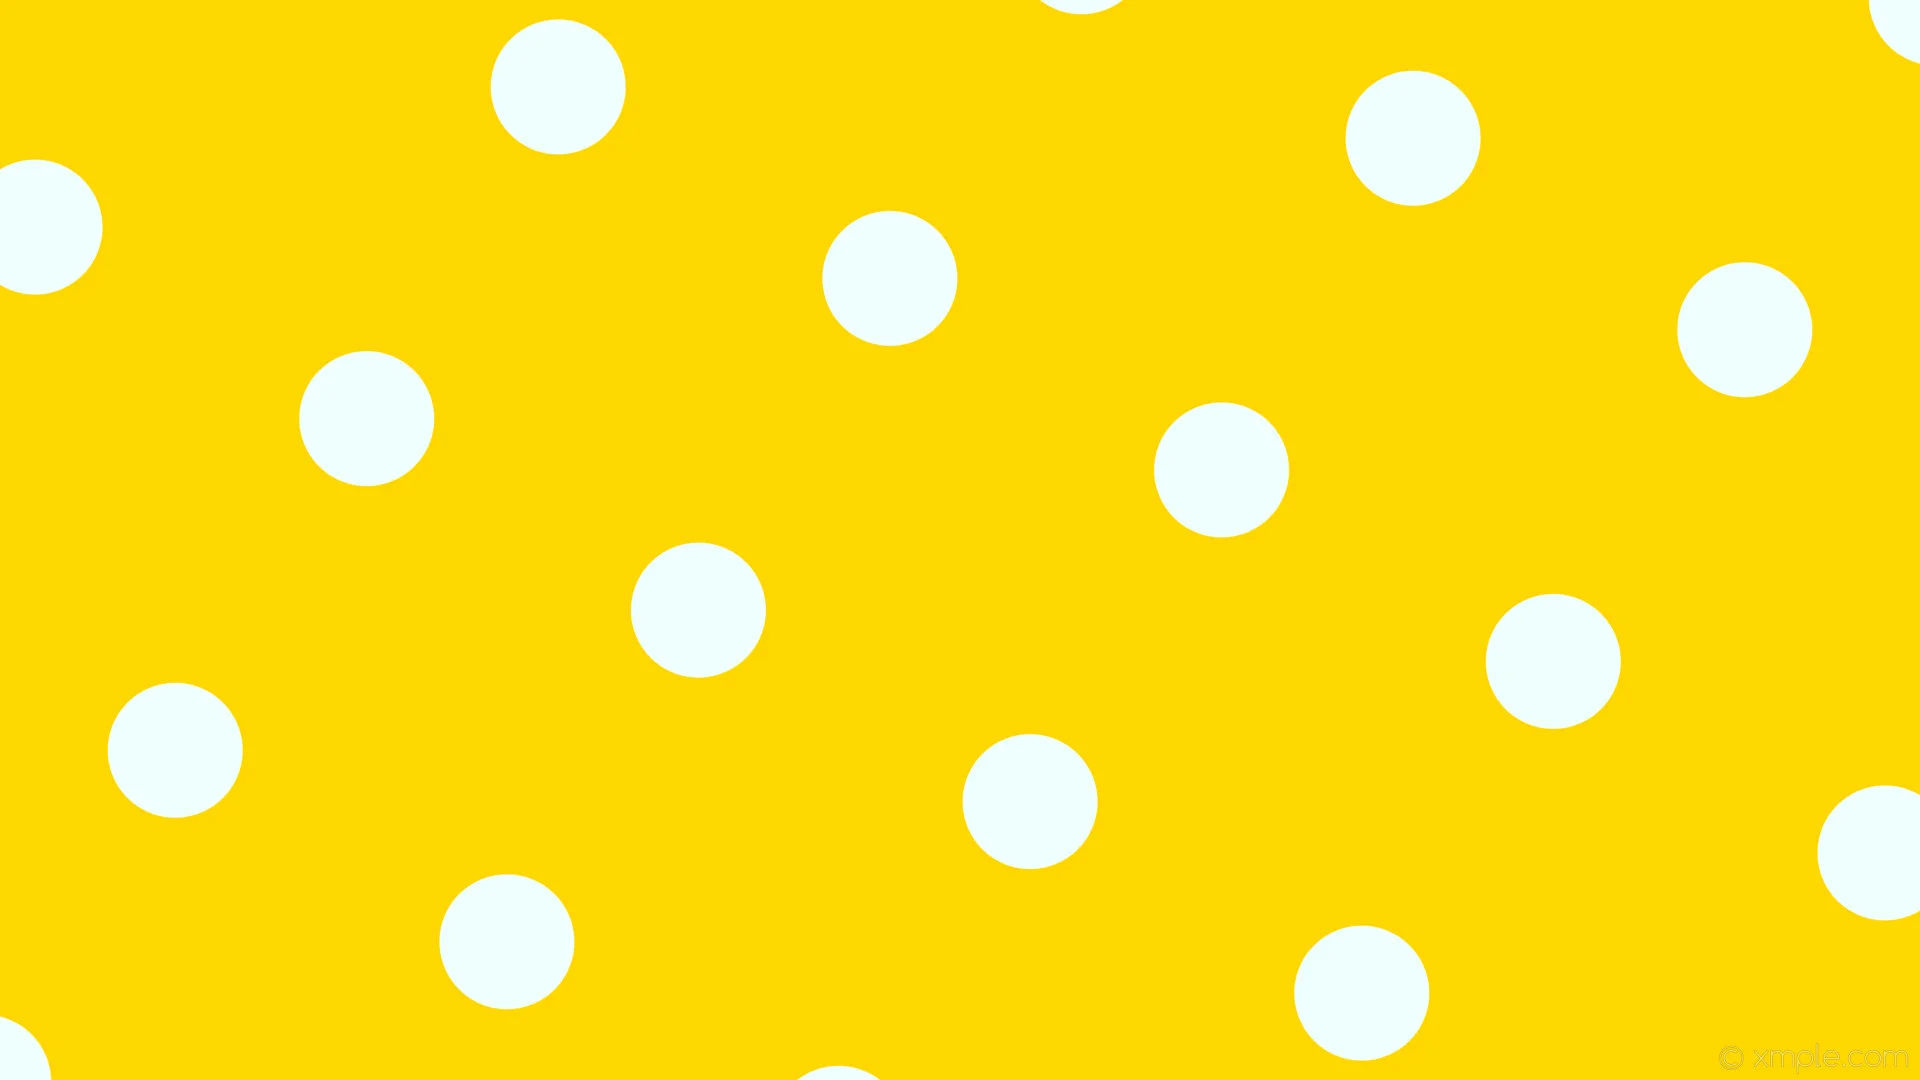 Wallpaper polka dots spots yellow white gold azure #ffd700 #f0ffff 150 135px 383px